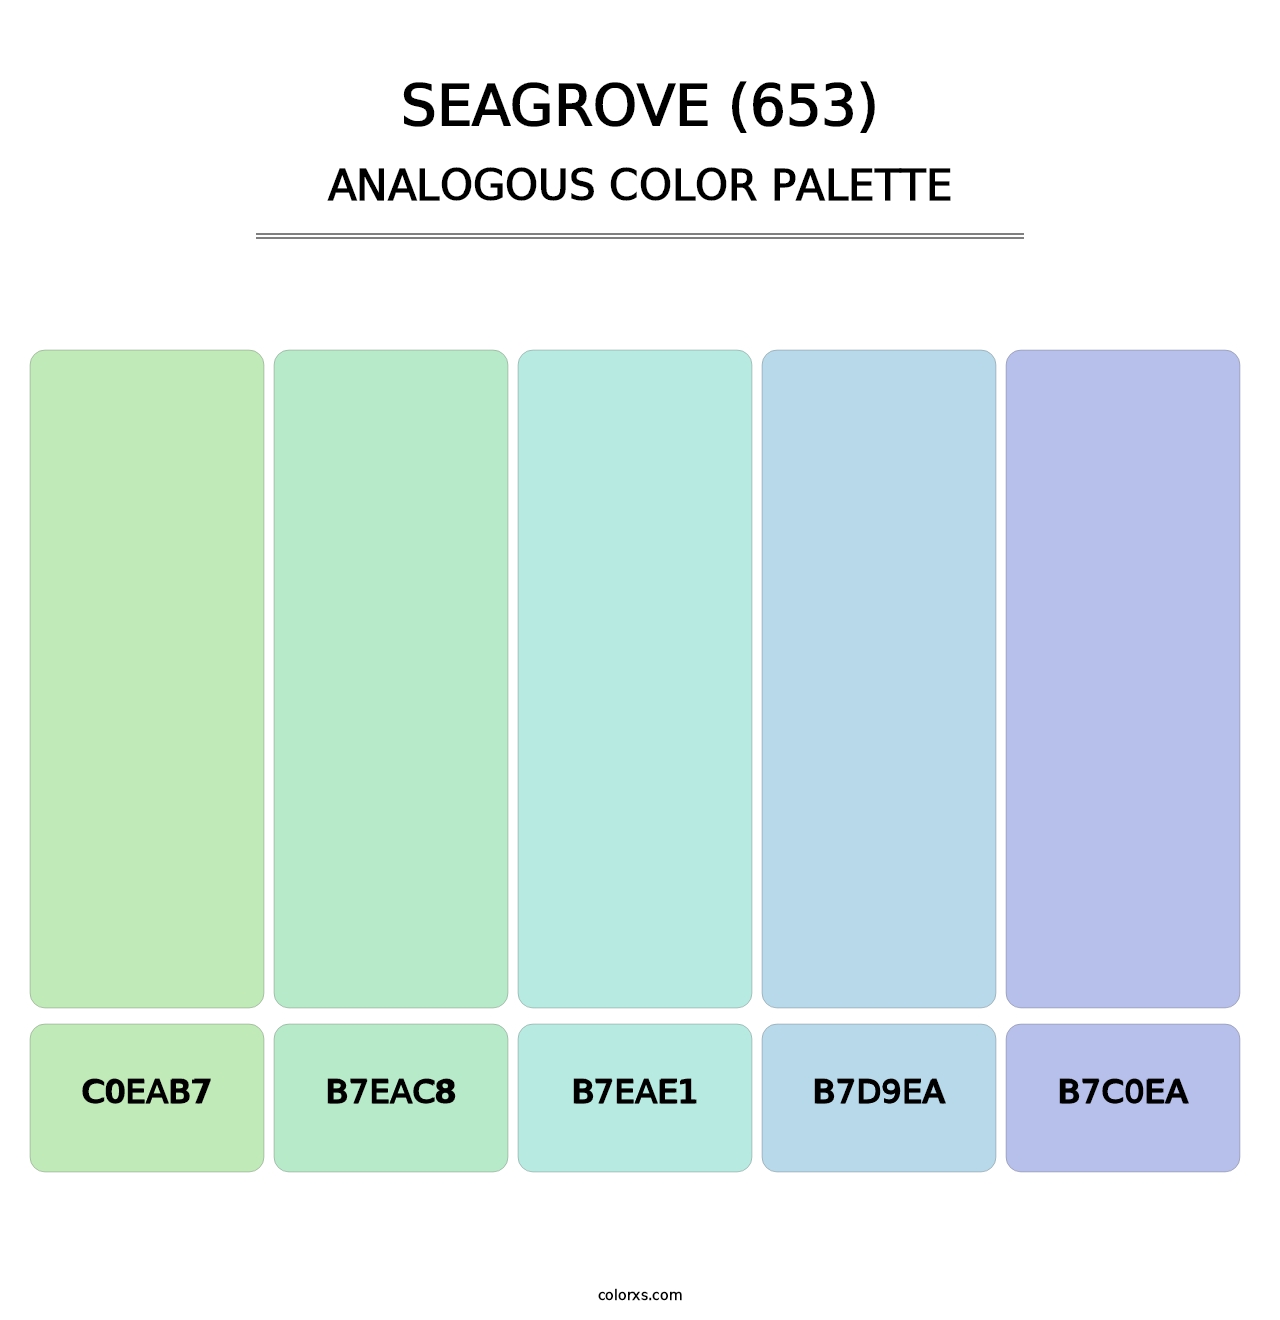 Seagrove (653) - Analogous Color Palette